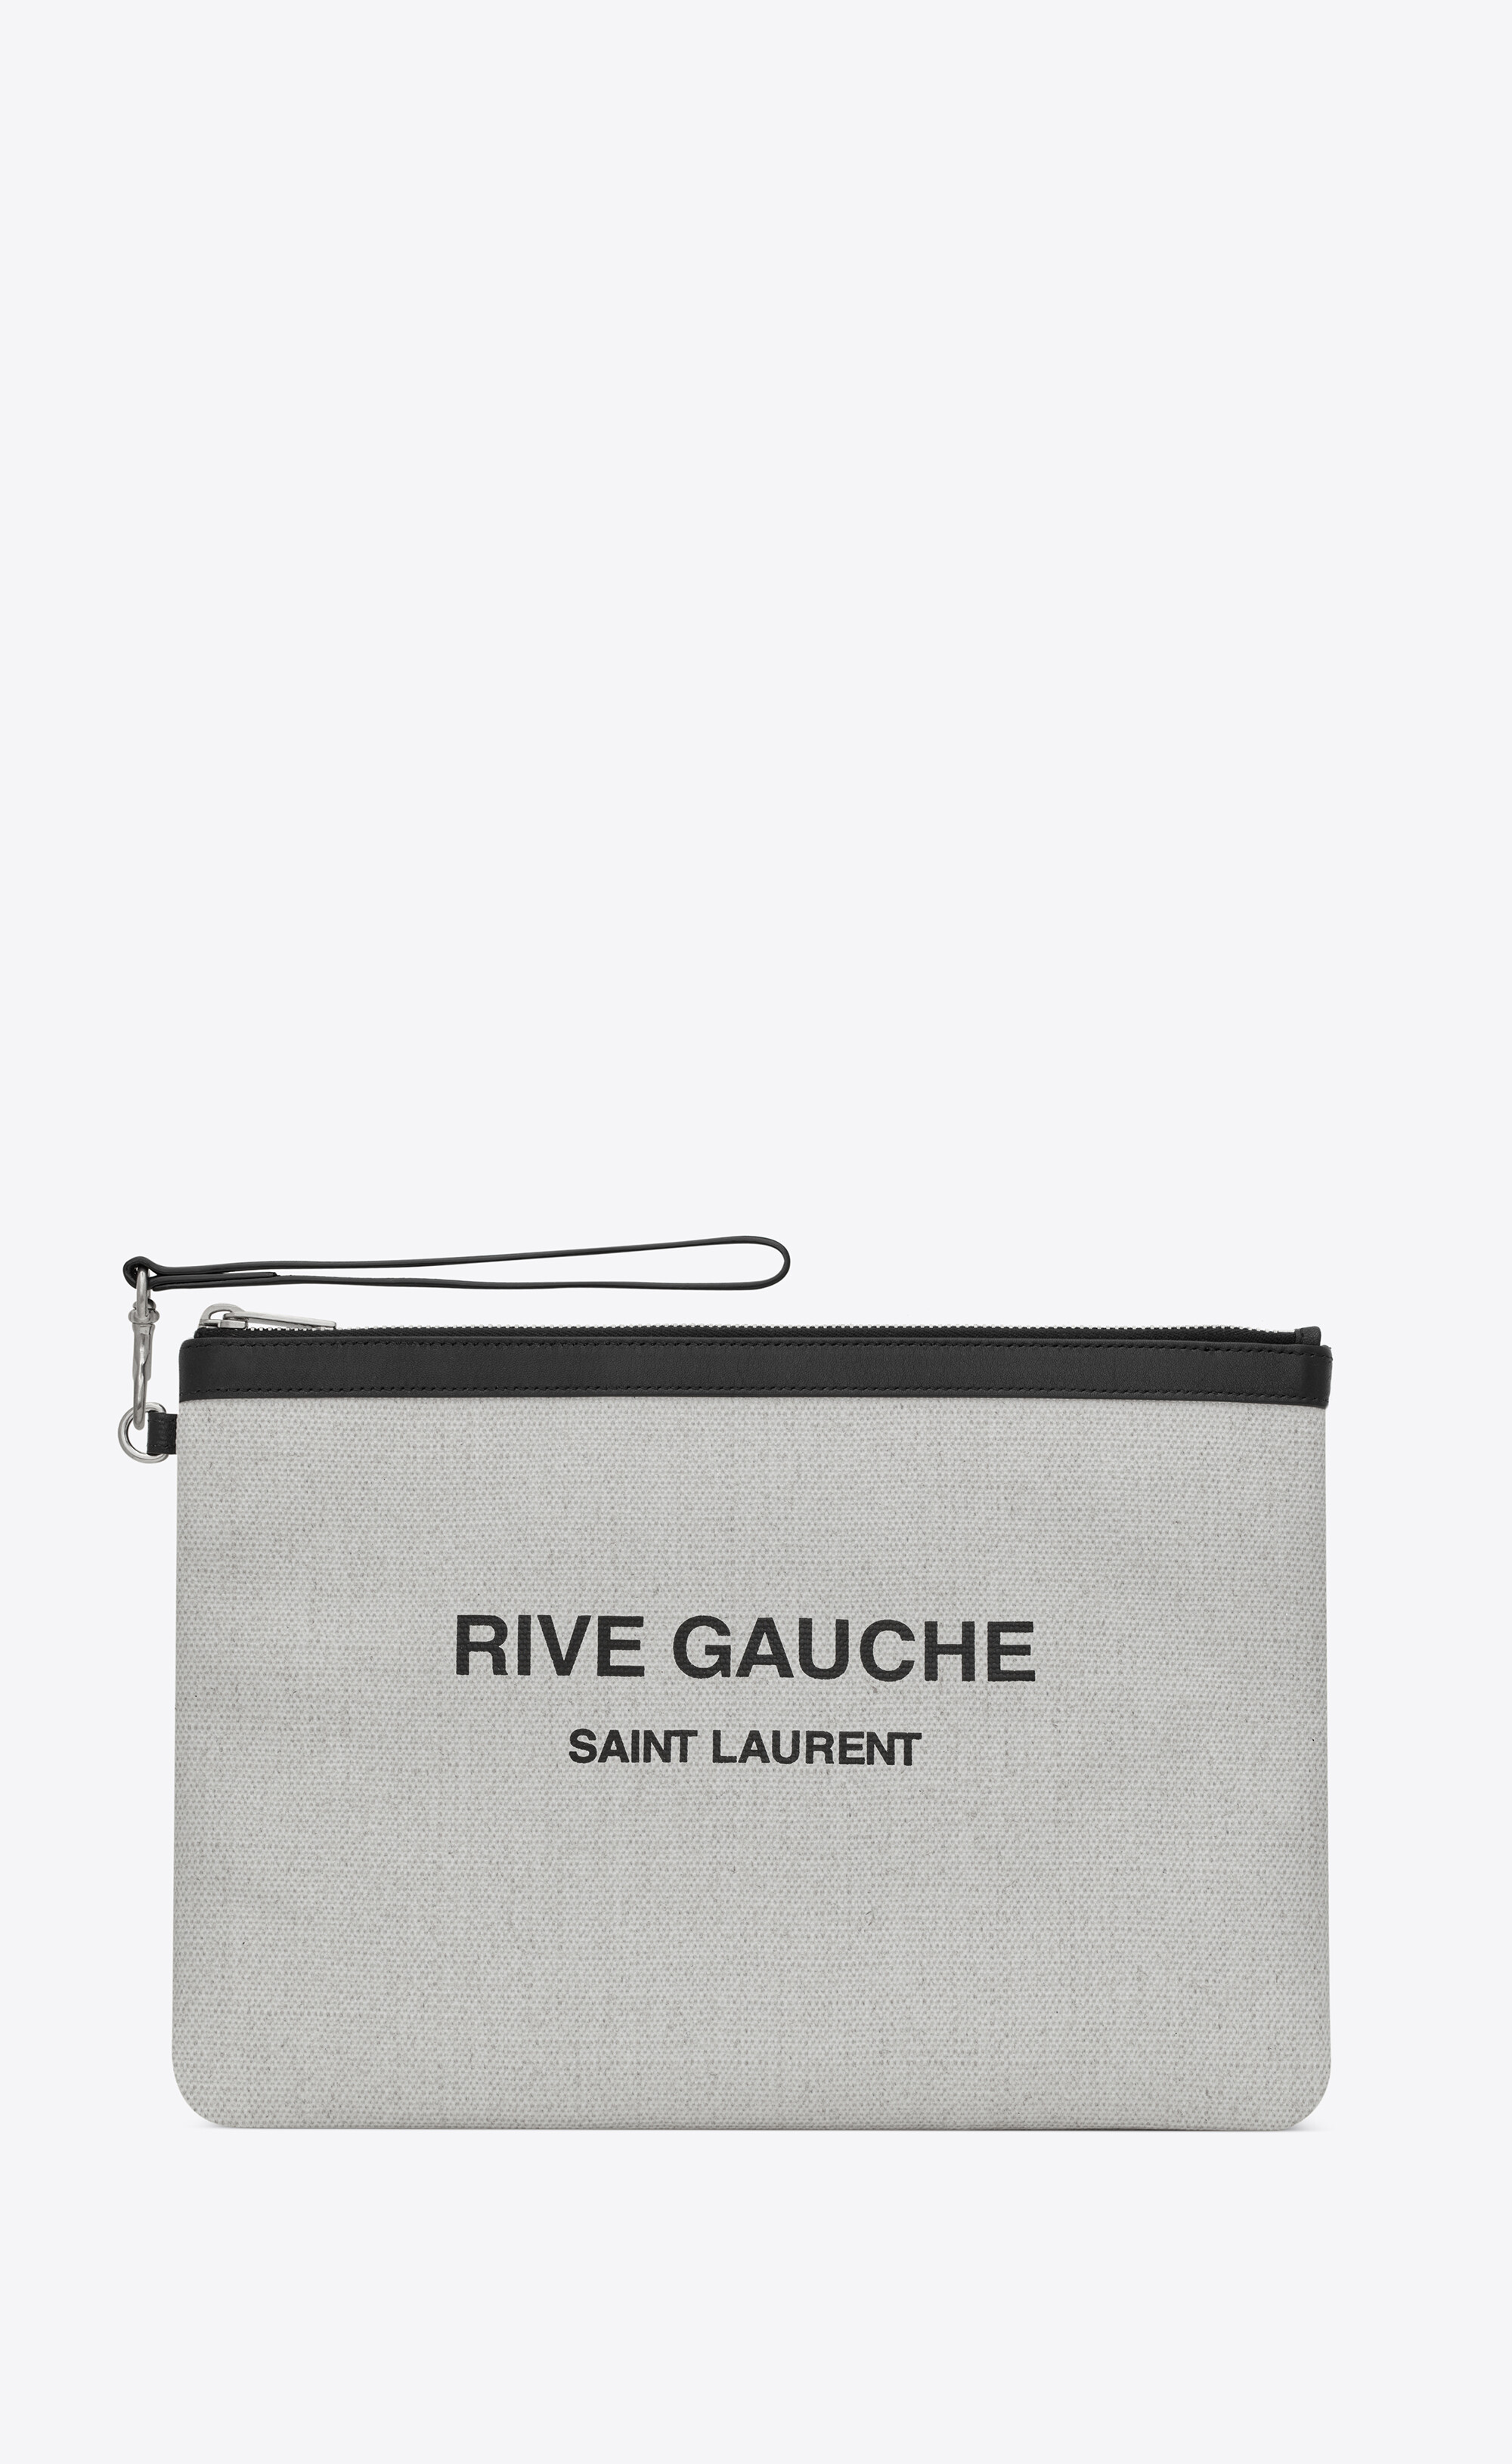 Rive Gauche Canvas Pouch in White - Saint Laurent